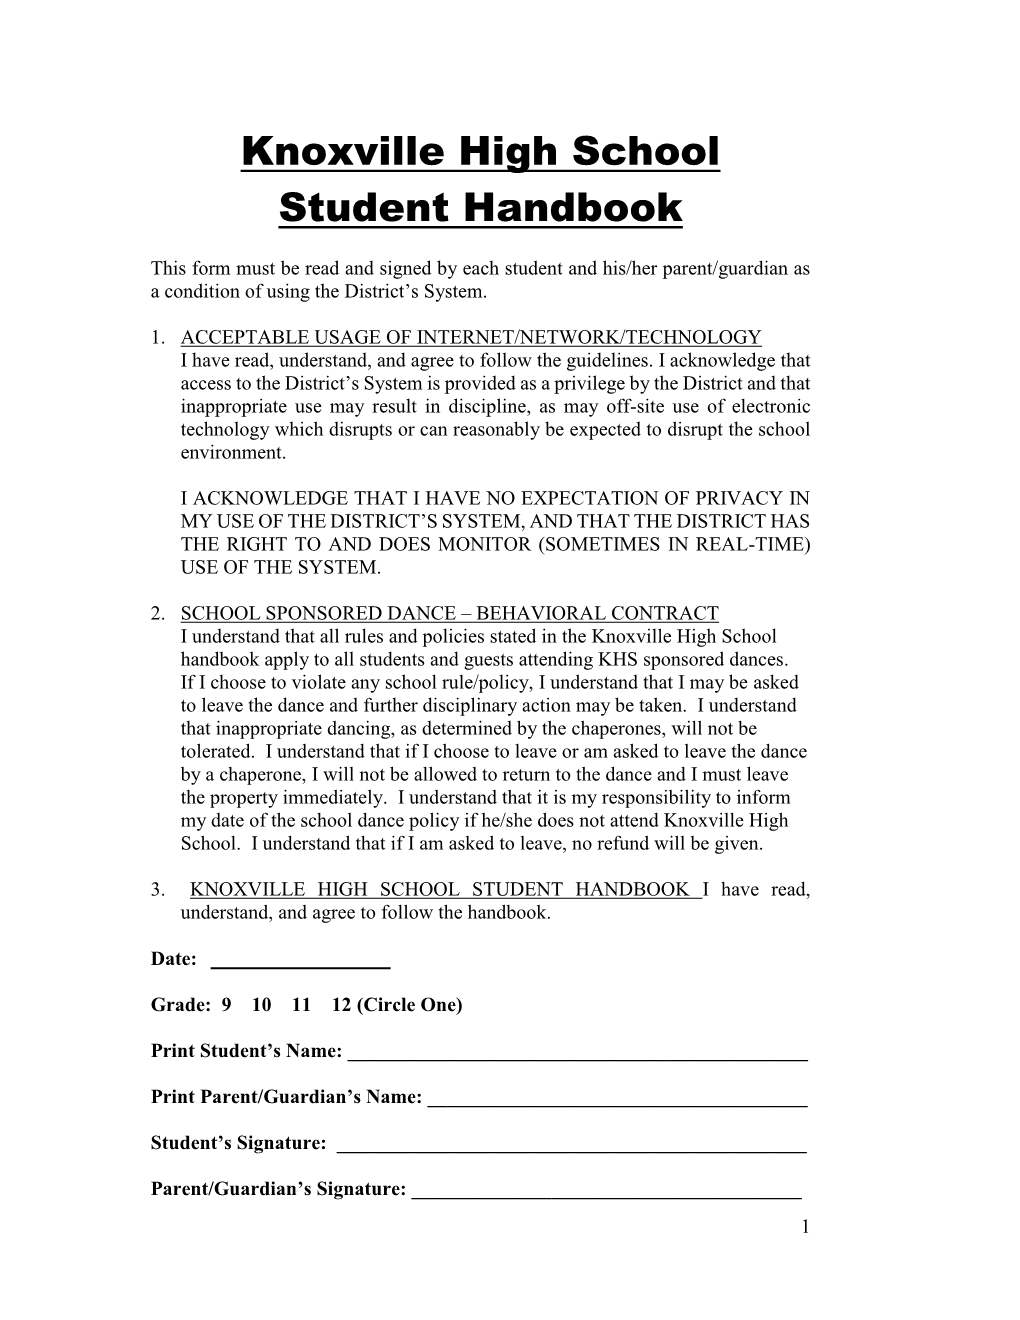 Knoxville High School Student Handbook